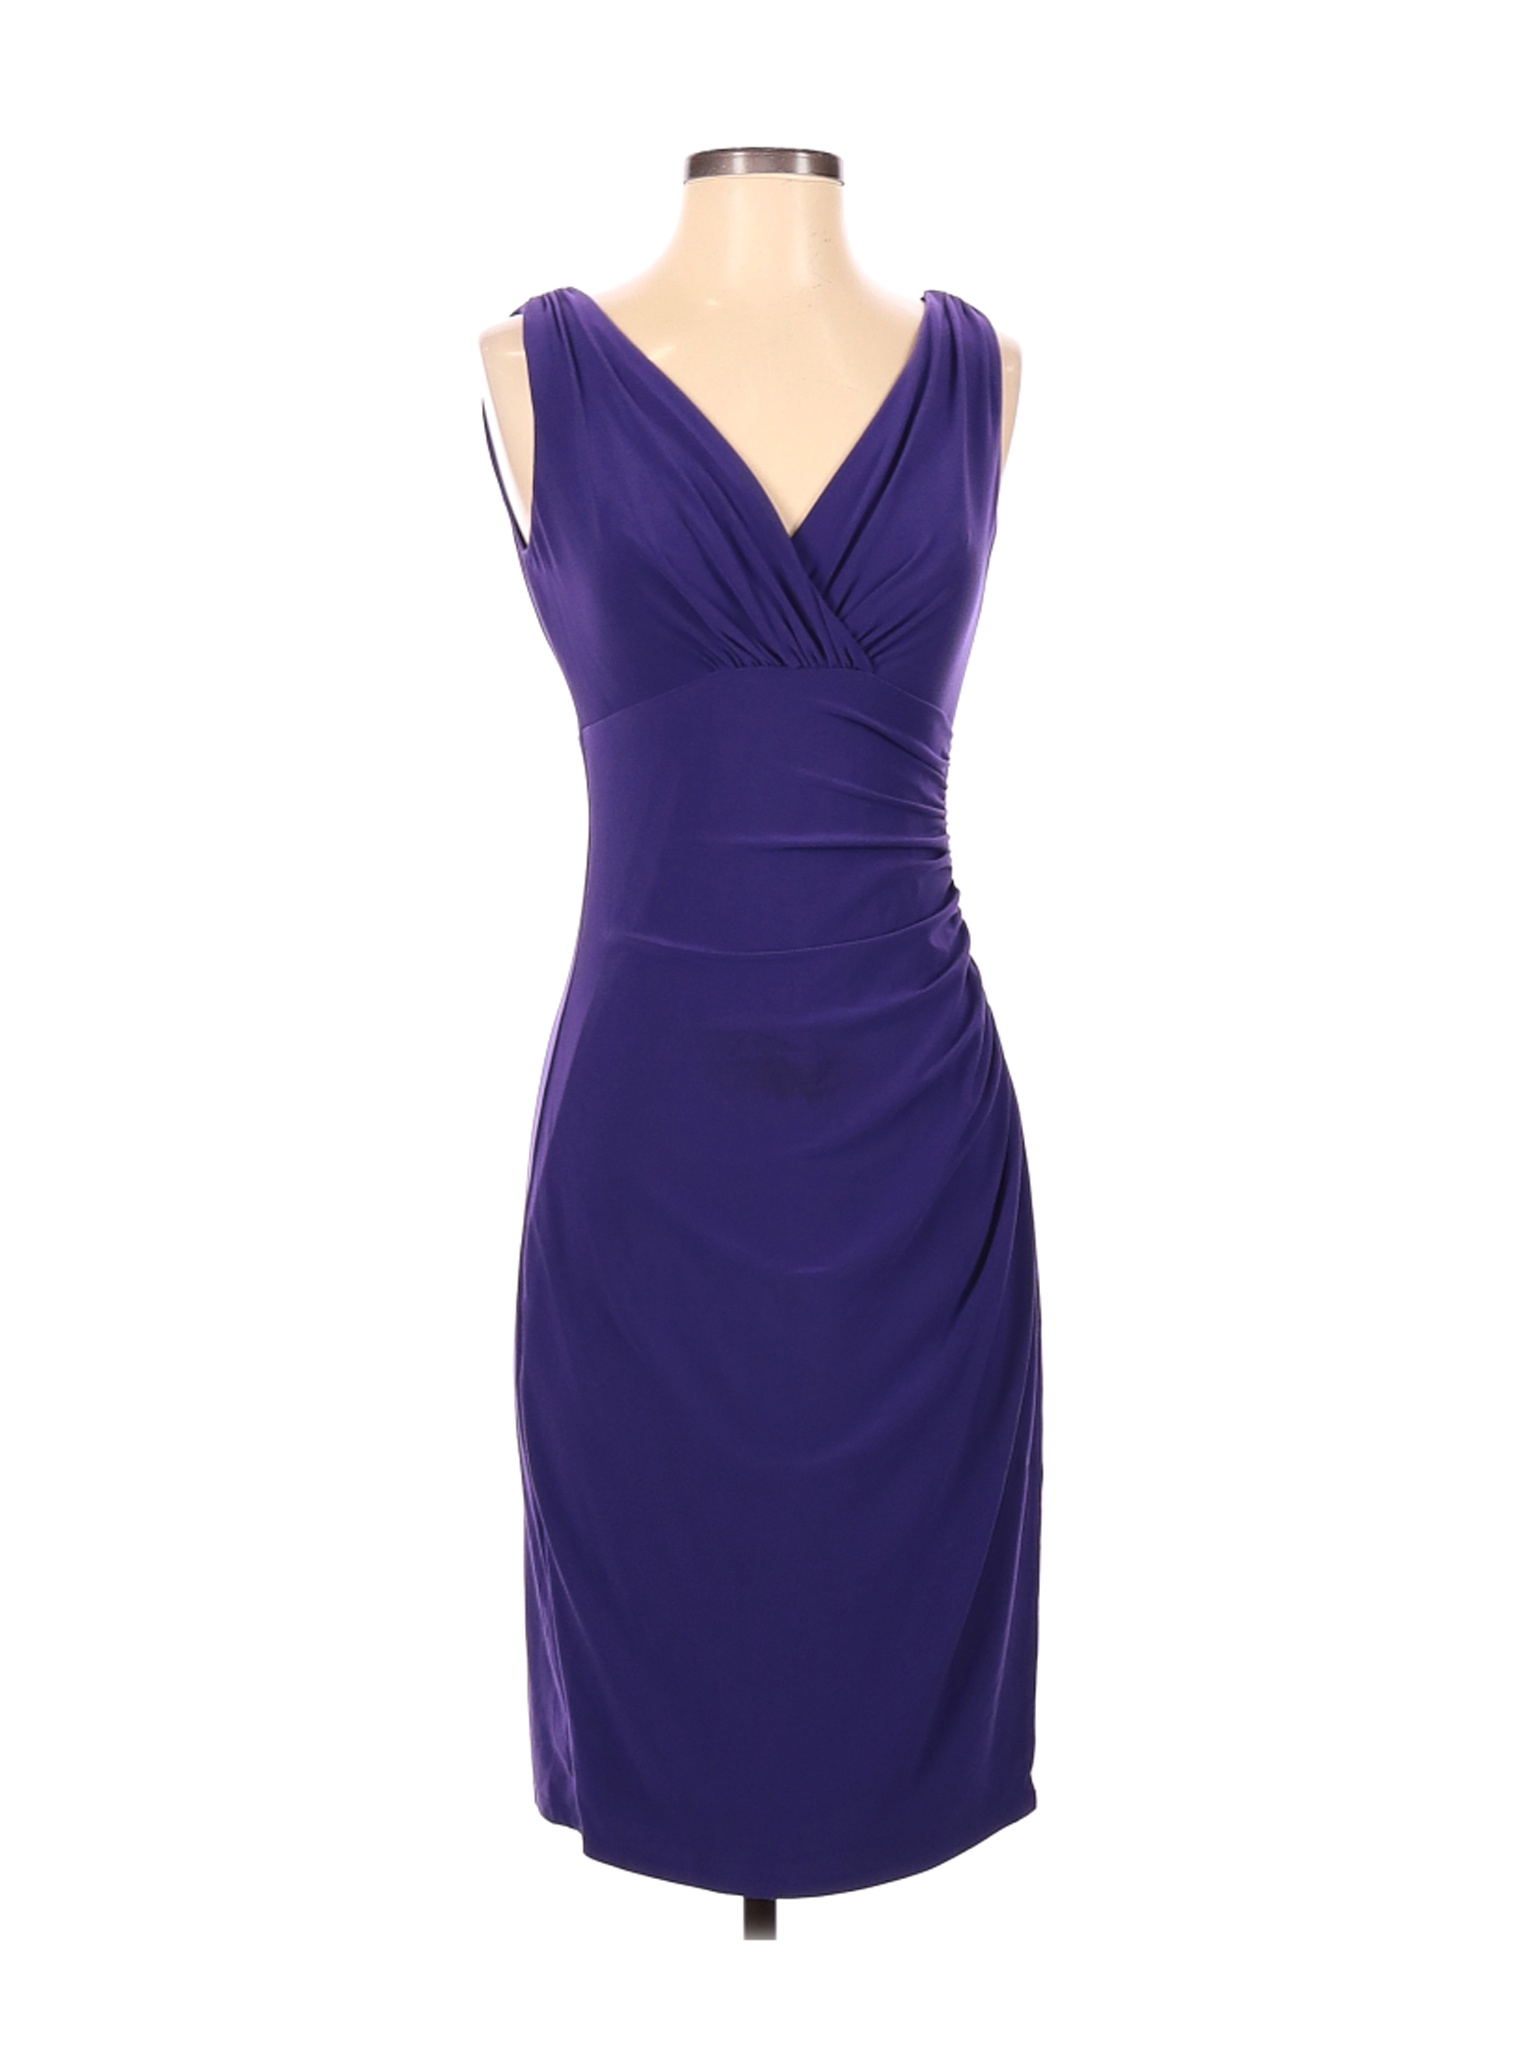 Lauren by Ralph Lauren Women Purple Cocktail Dress 2 | eBay